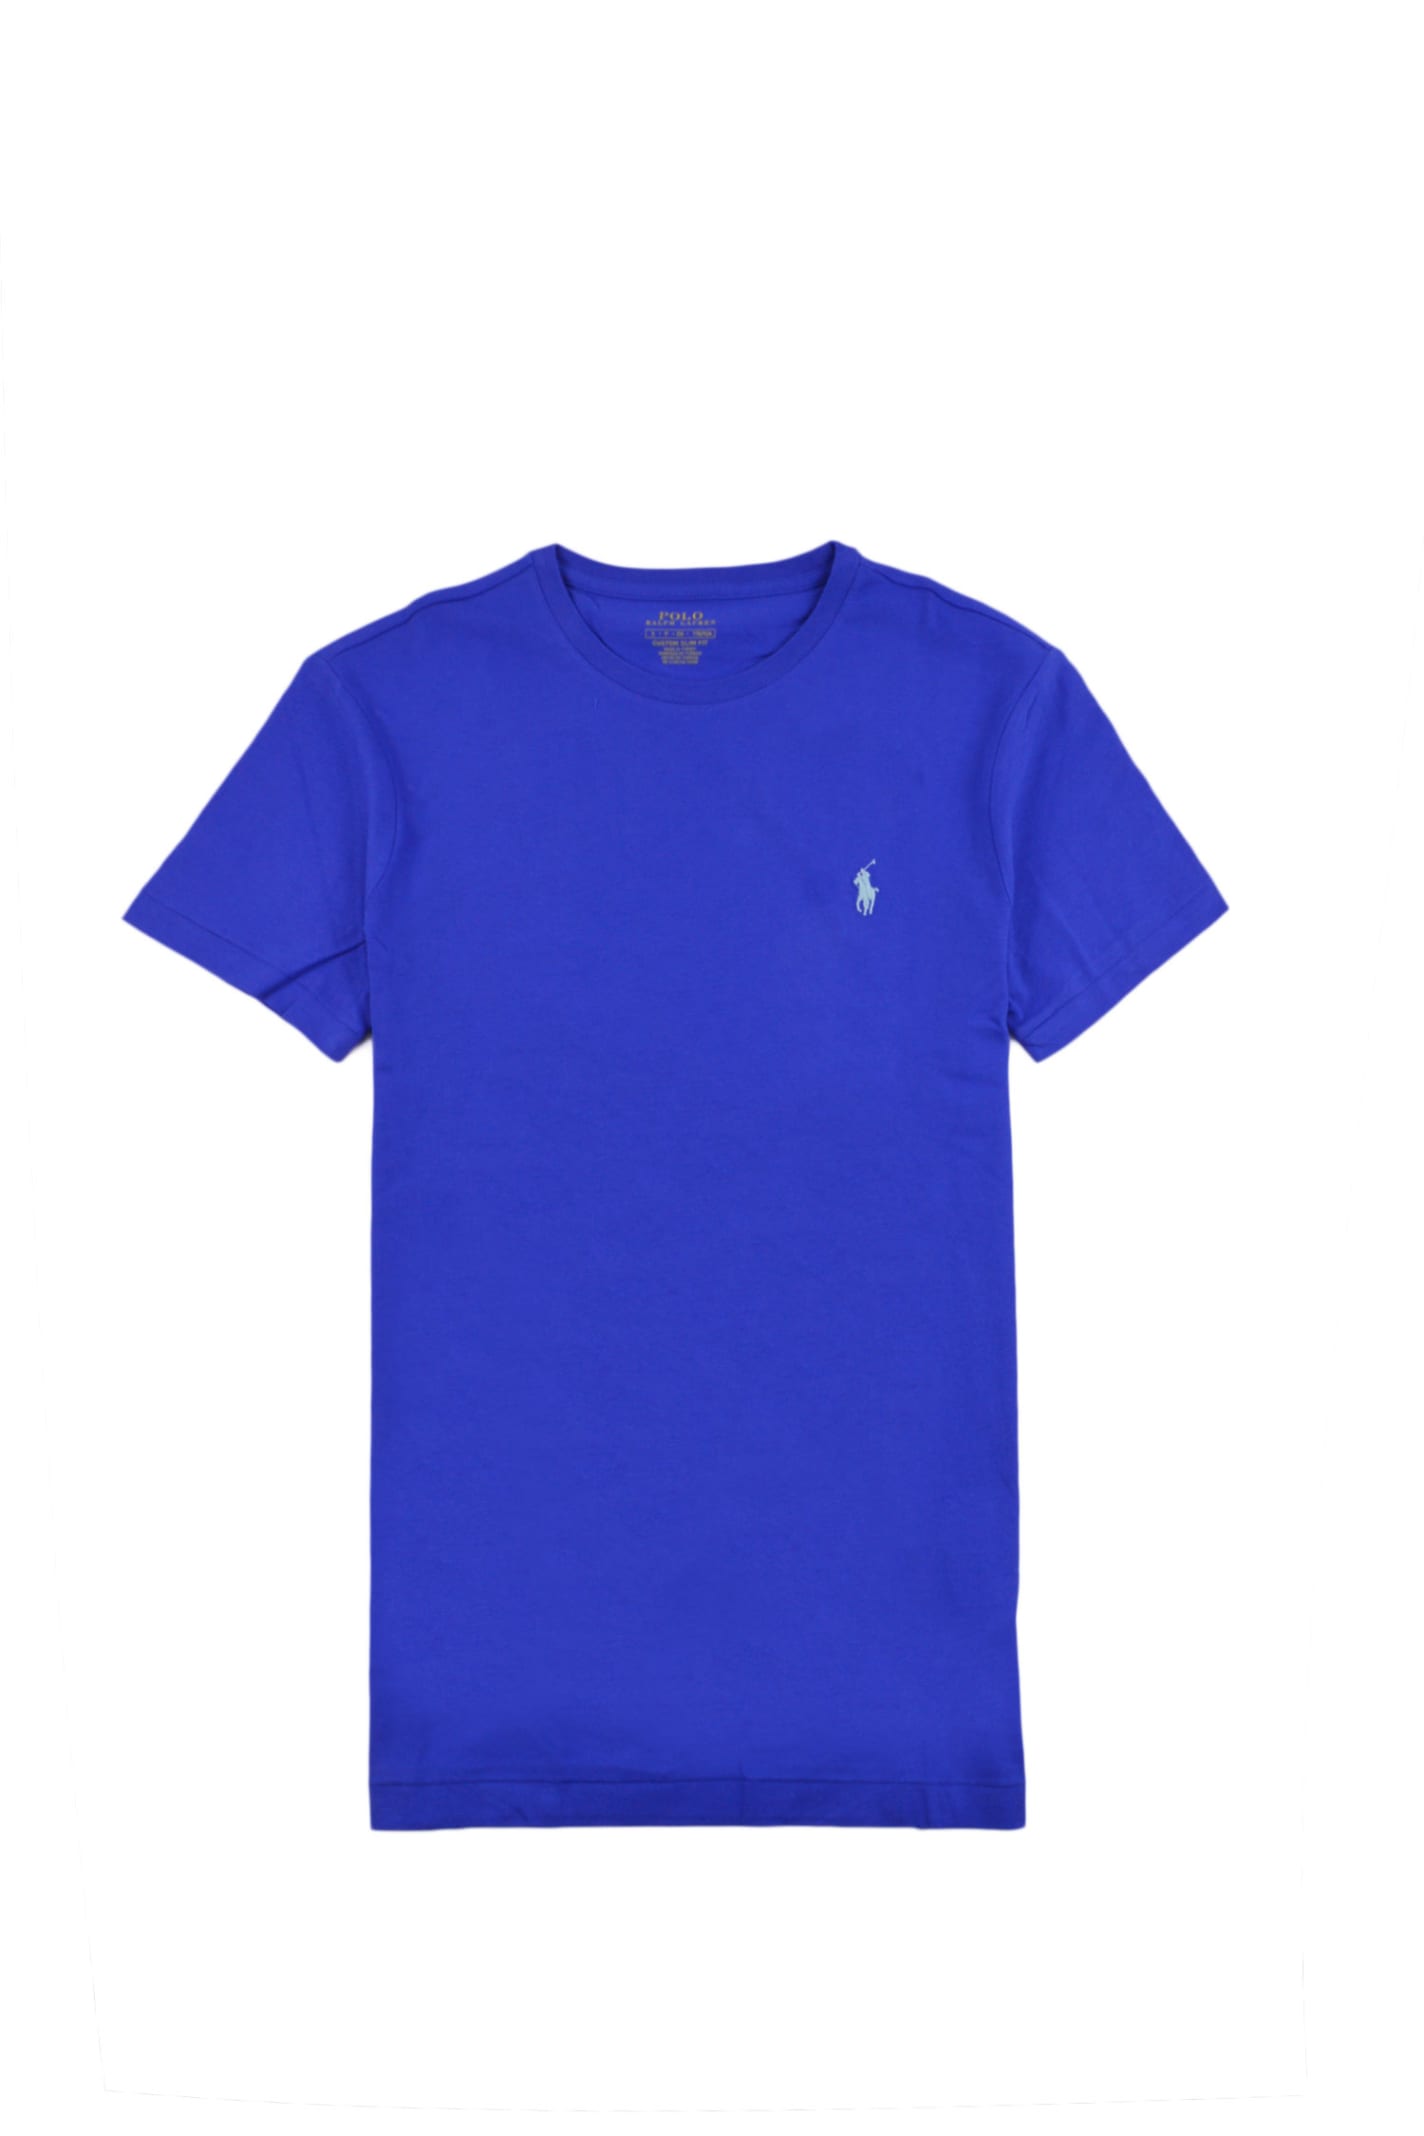 Ralph Lauren T-shirt In Maidstone Blue